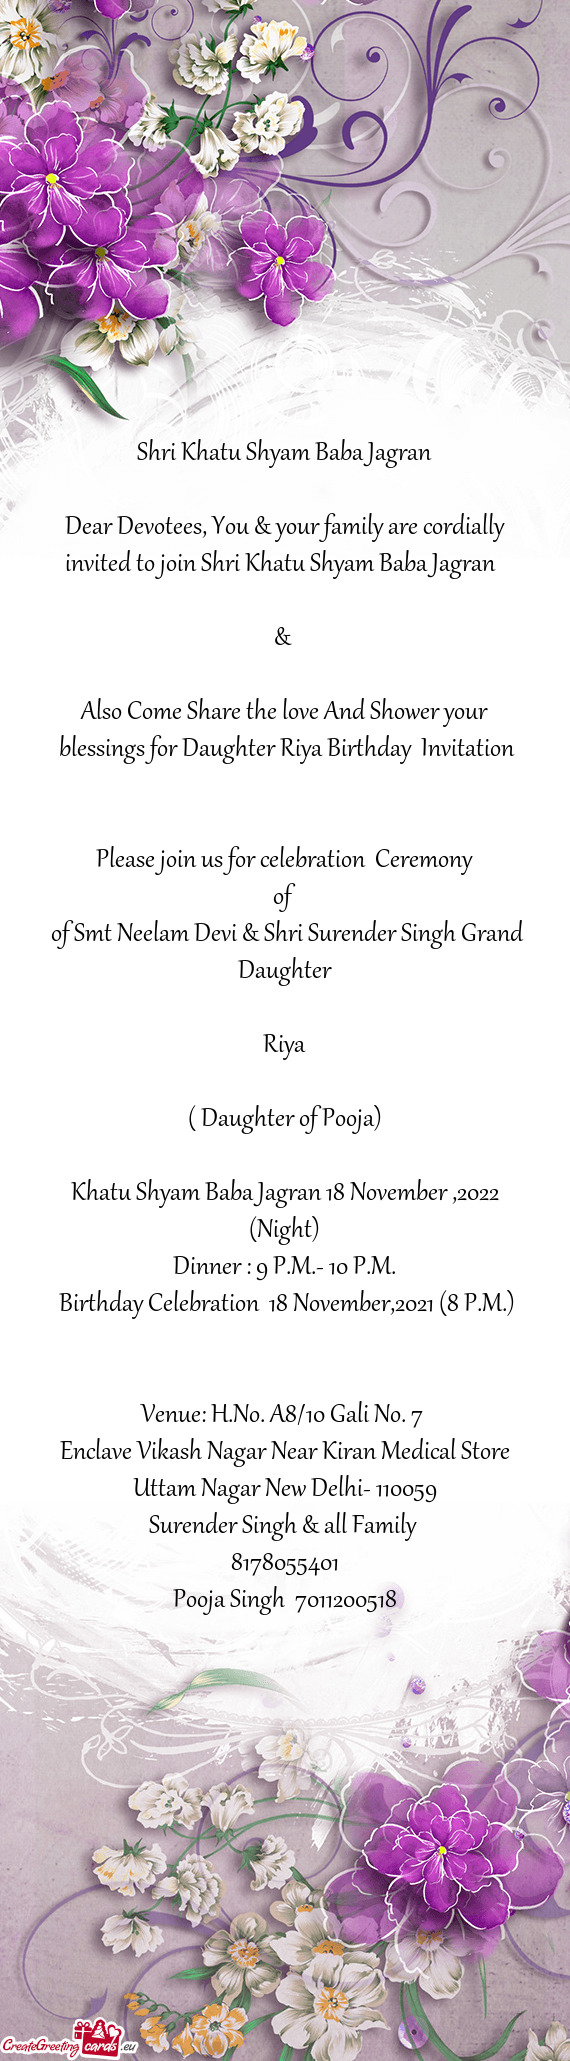 Blessings for Daughter Riya Birthday Invitation